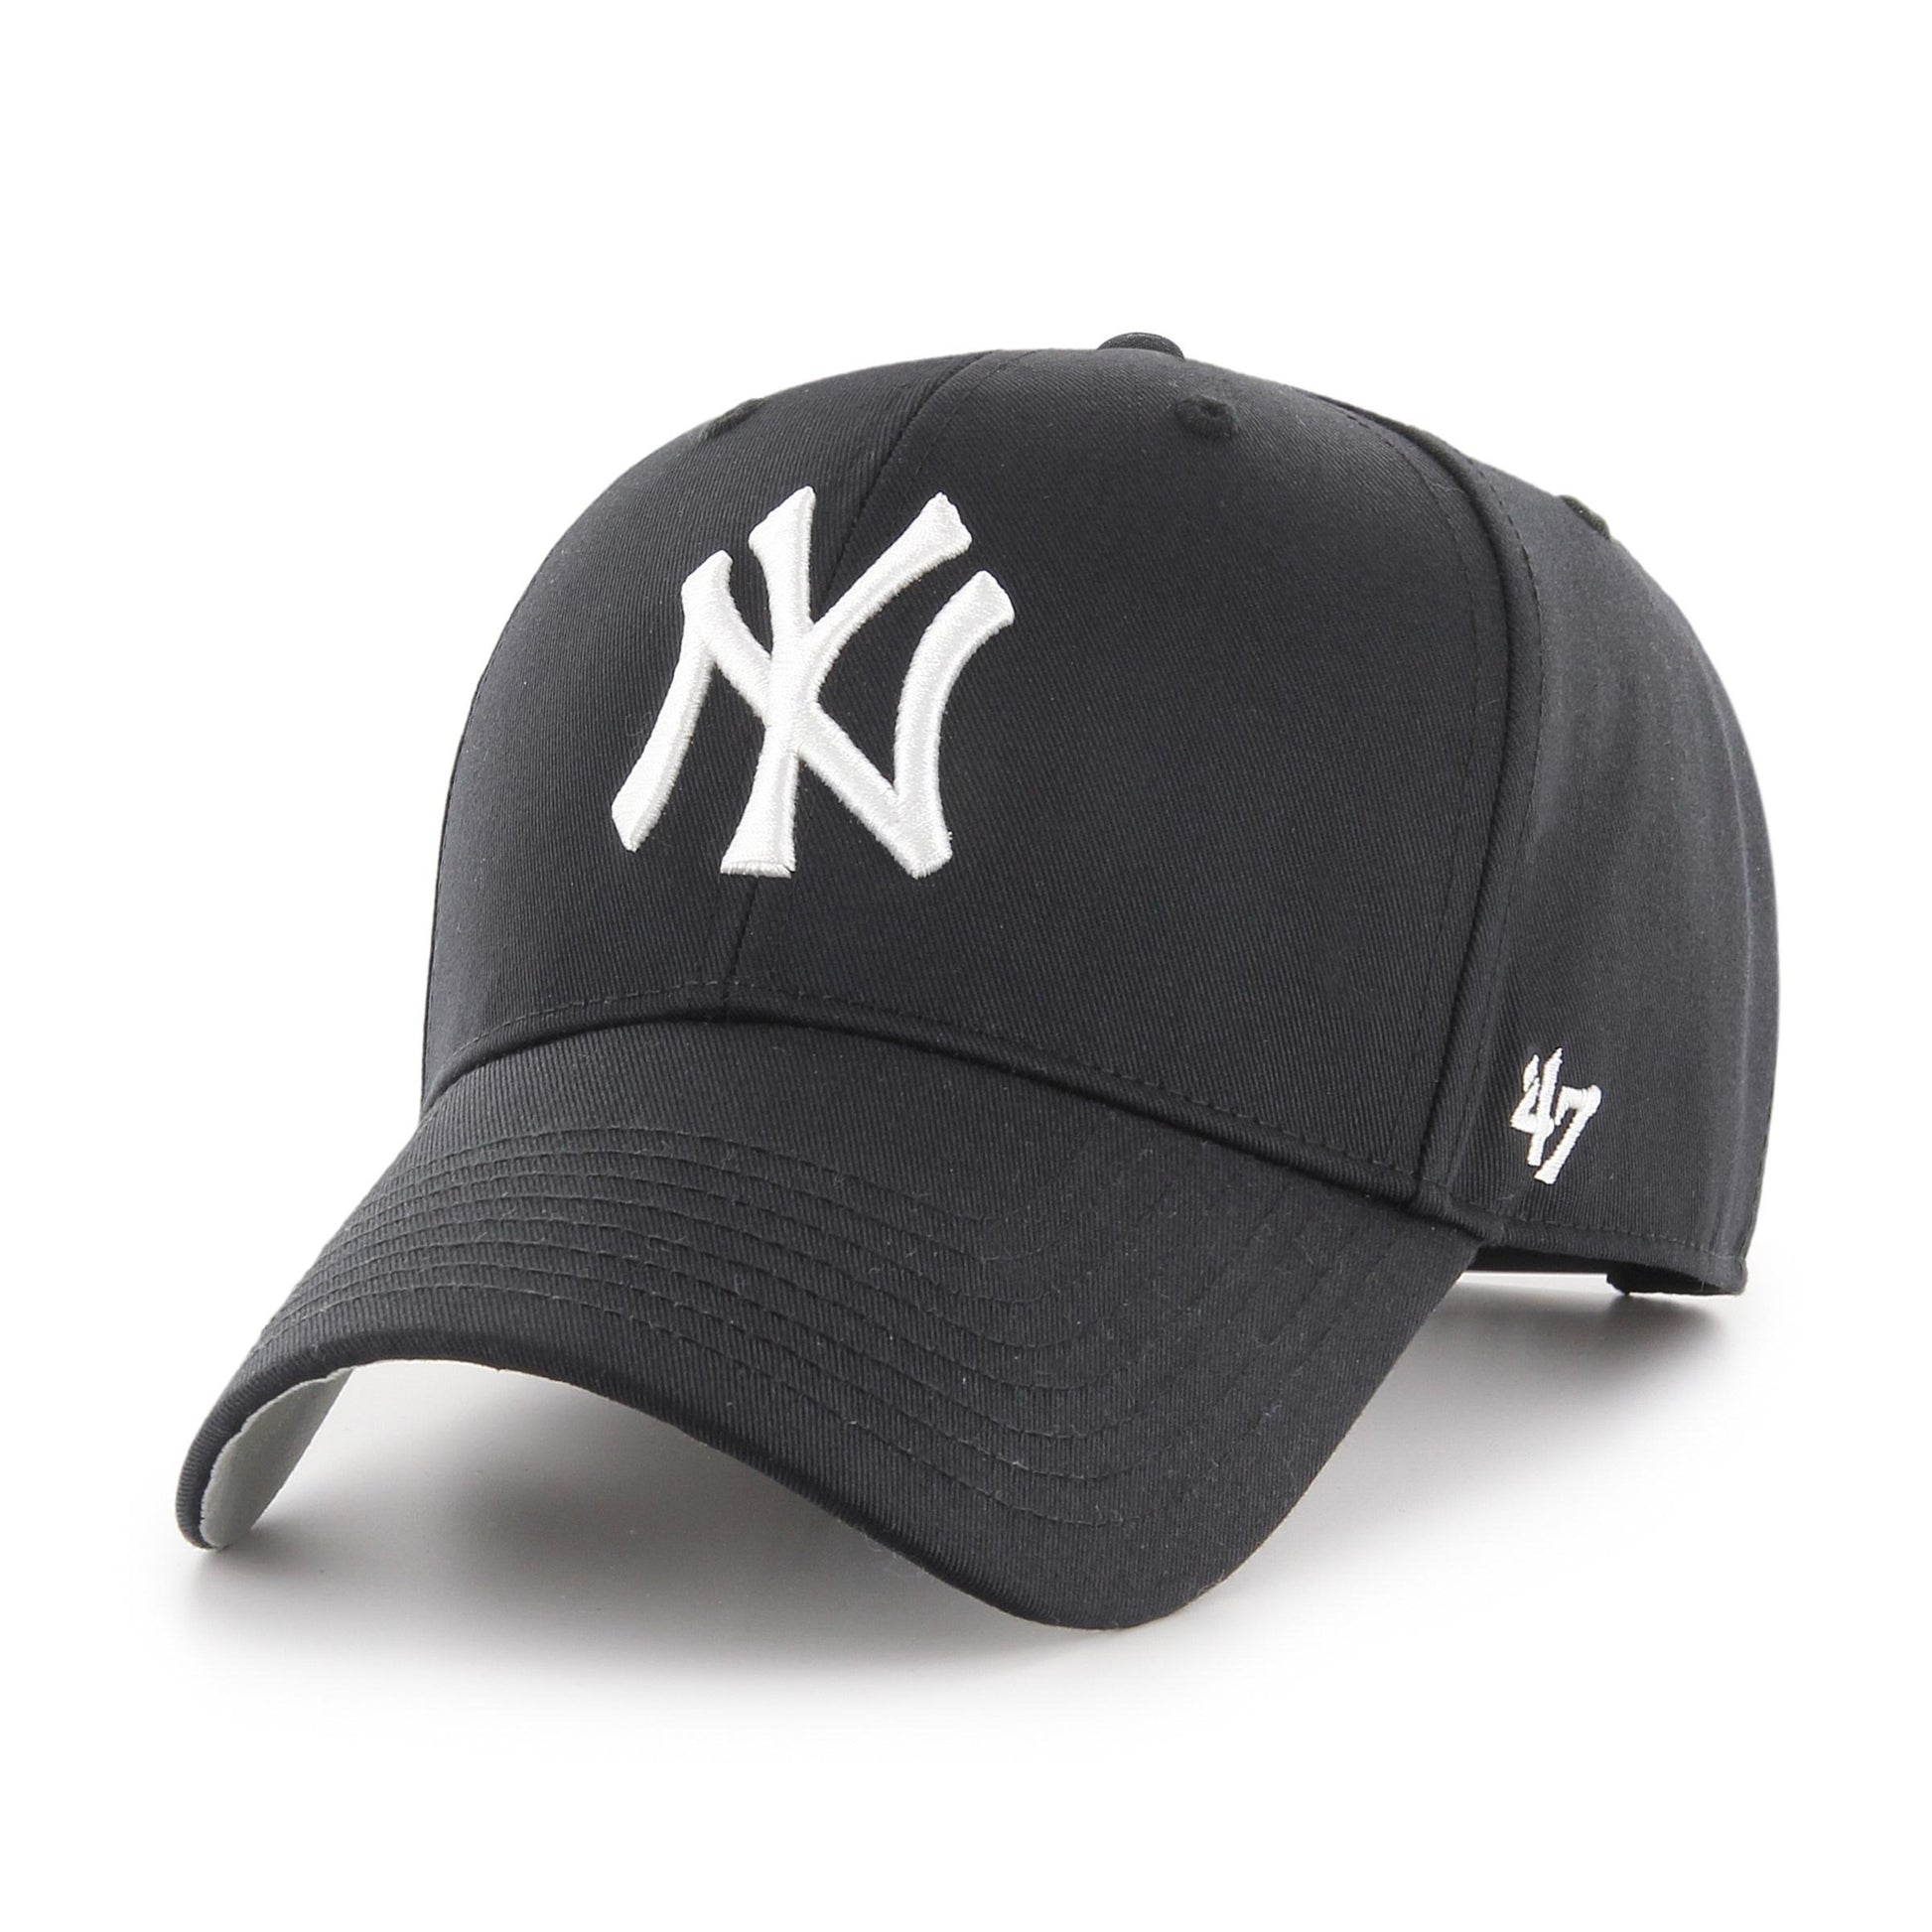 '47 - New York Yankees Raised Basic MVP Adjustable Cap - Sort - Headz Up 